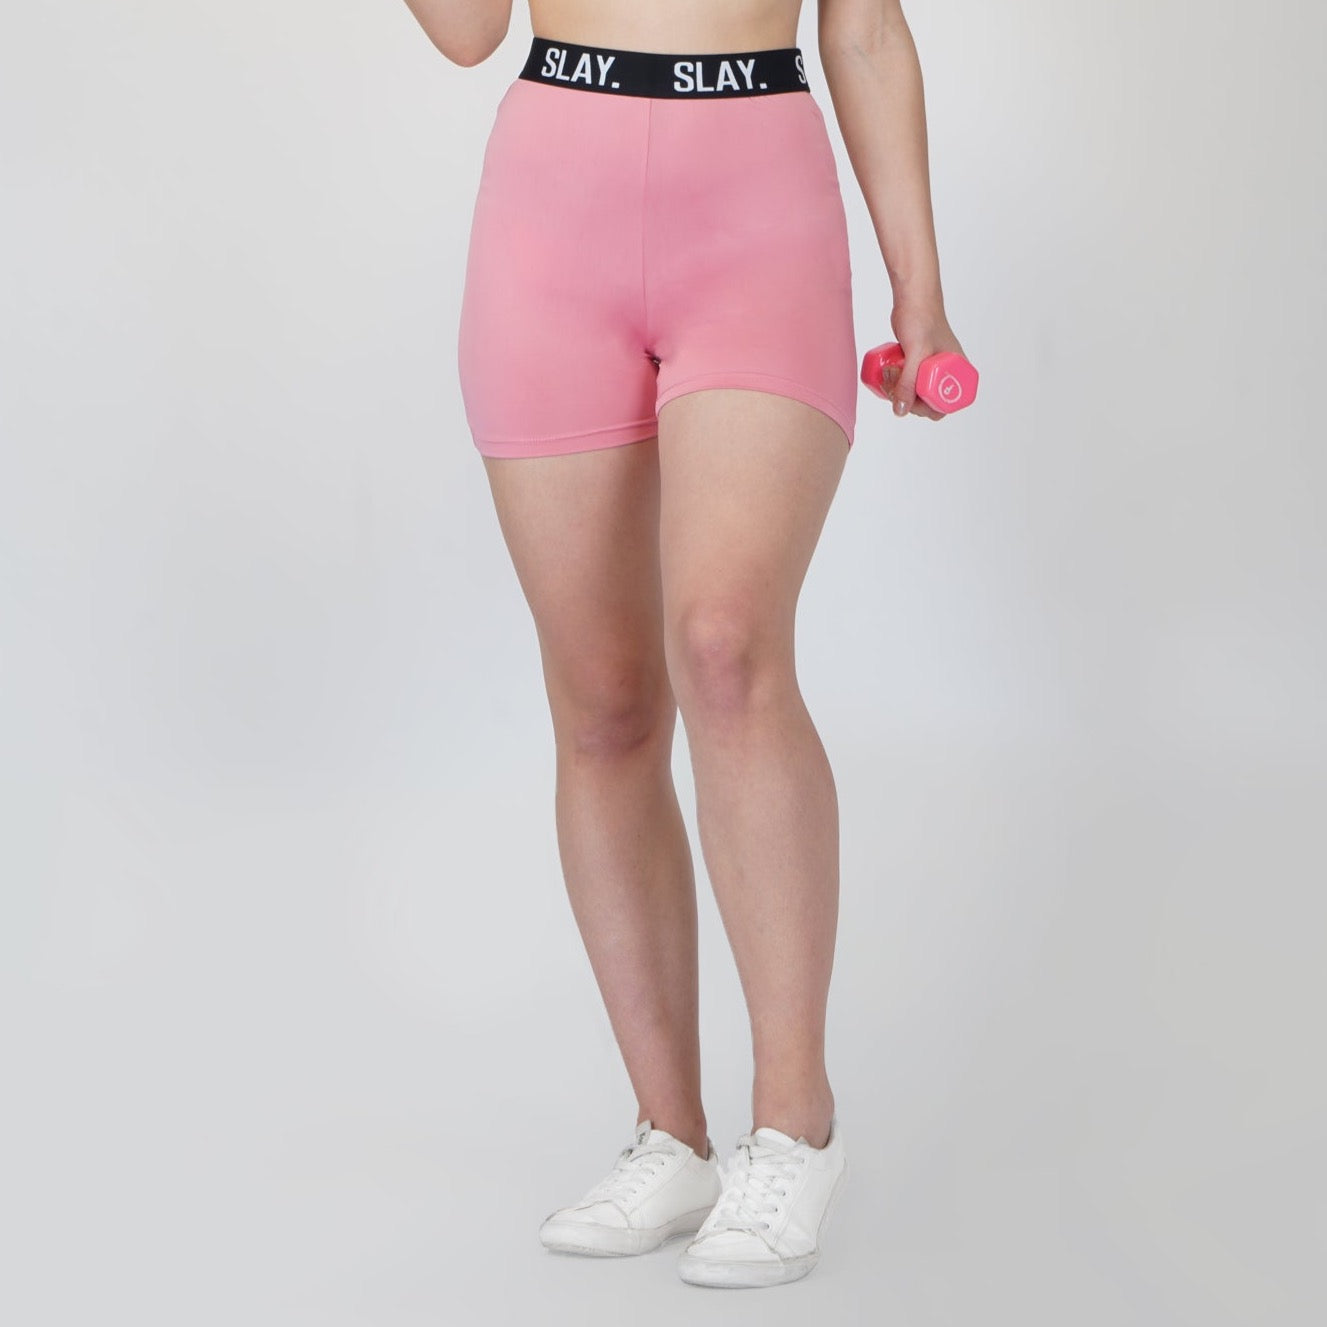 SLAY. Women's Pink Activewear High waist Shorts